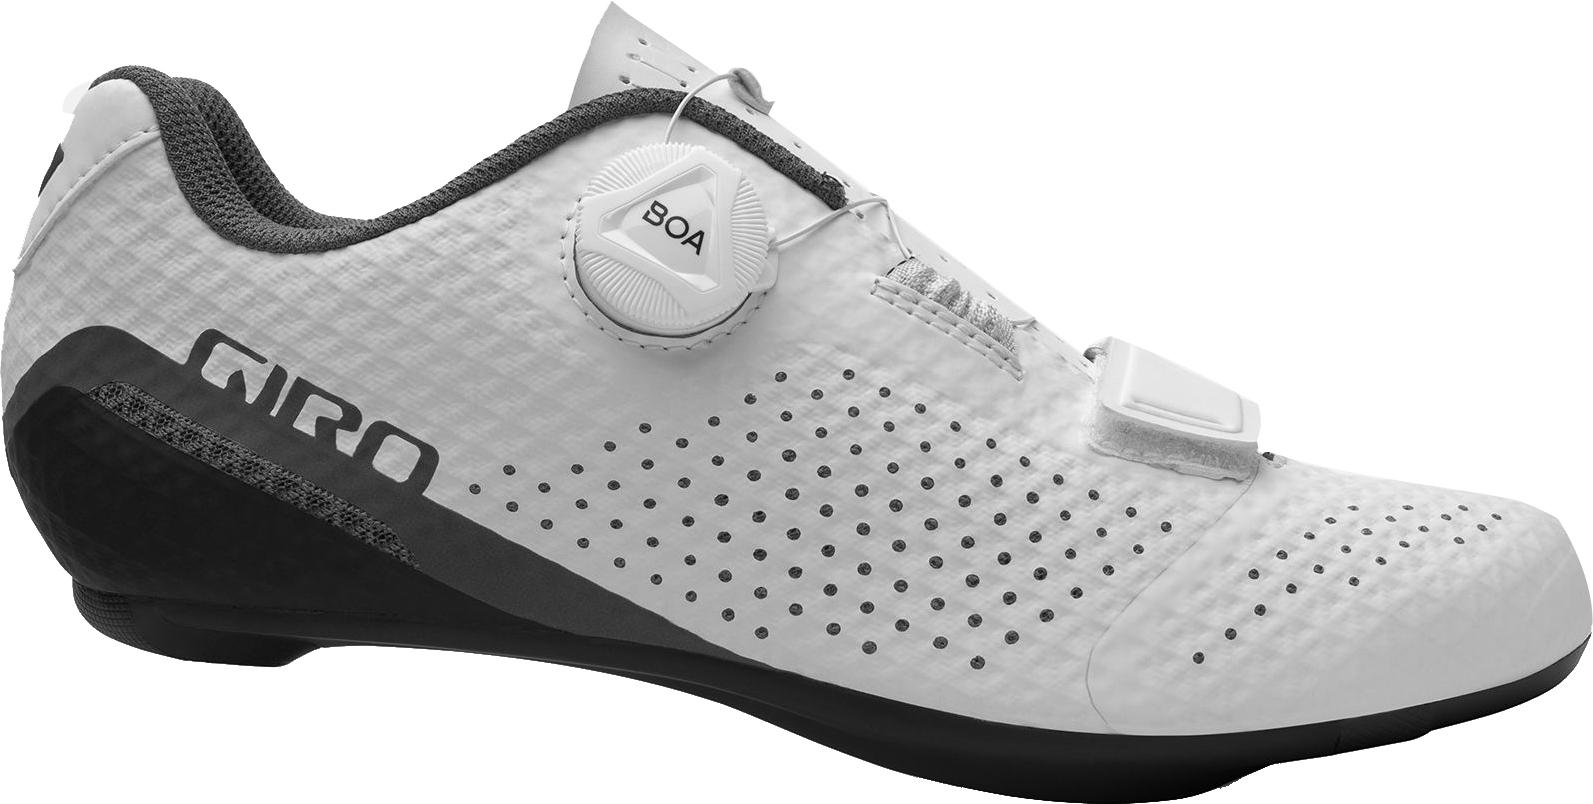 Giro Womens Cadet Road Shoes - White